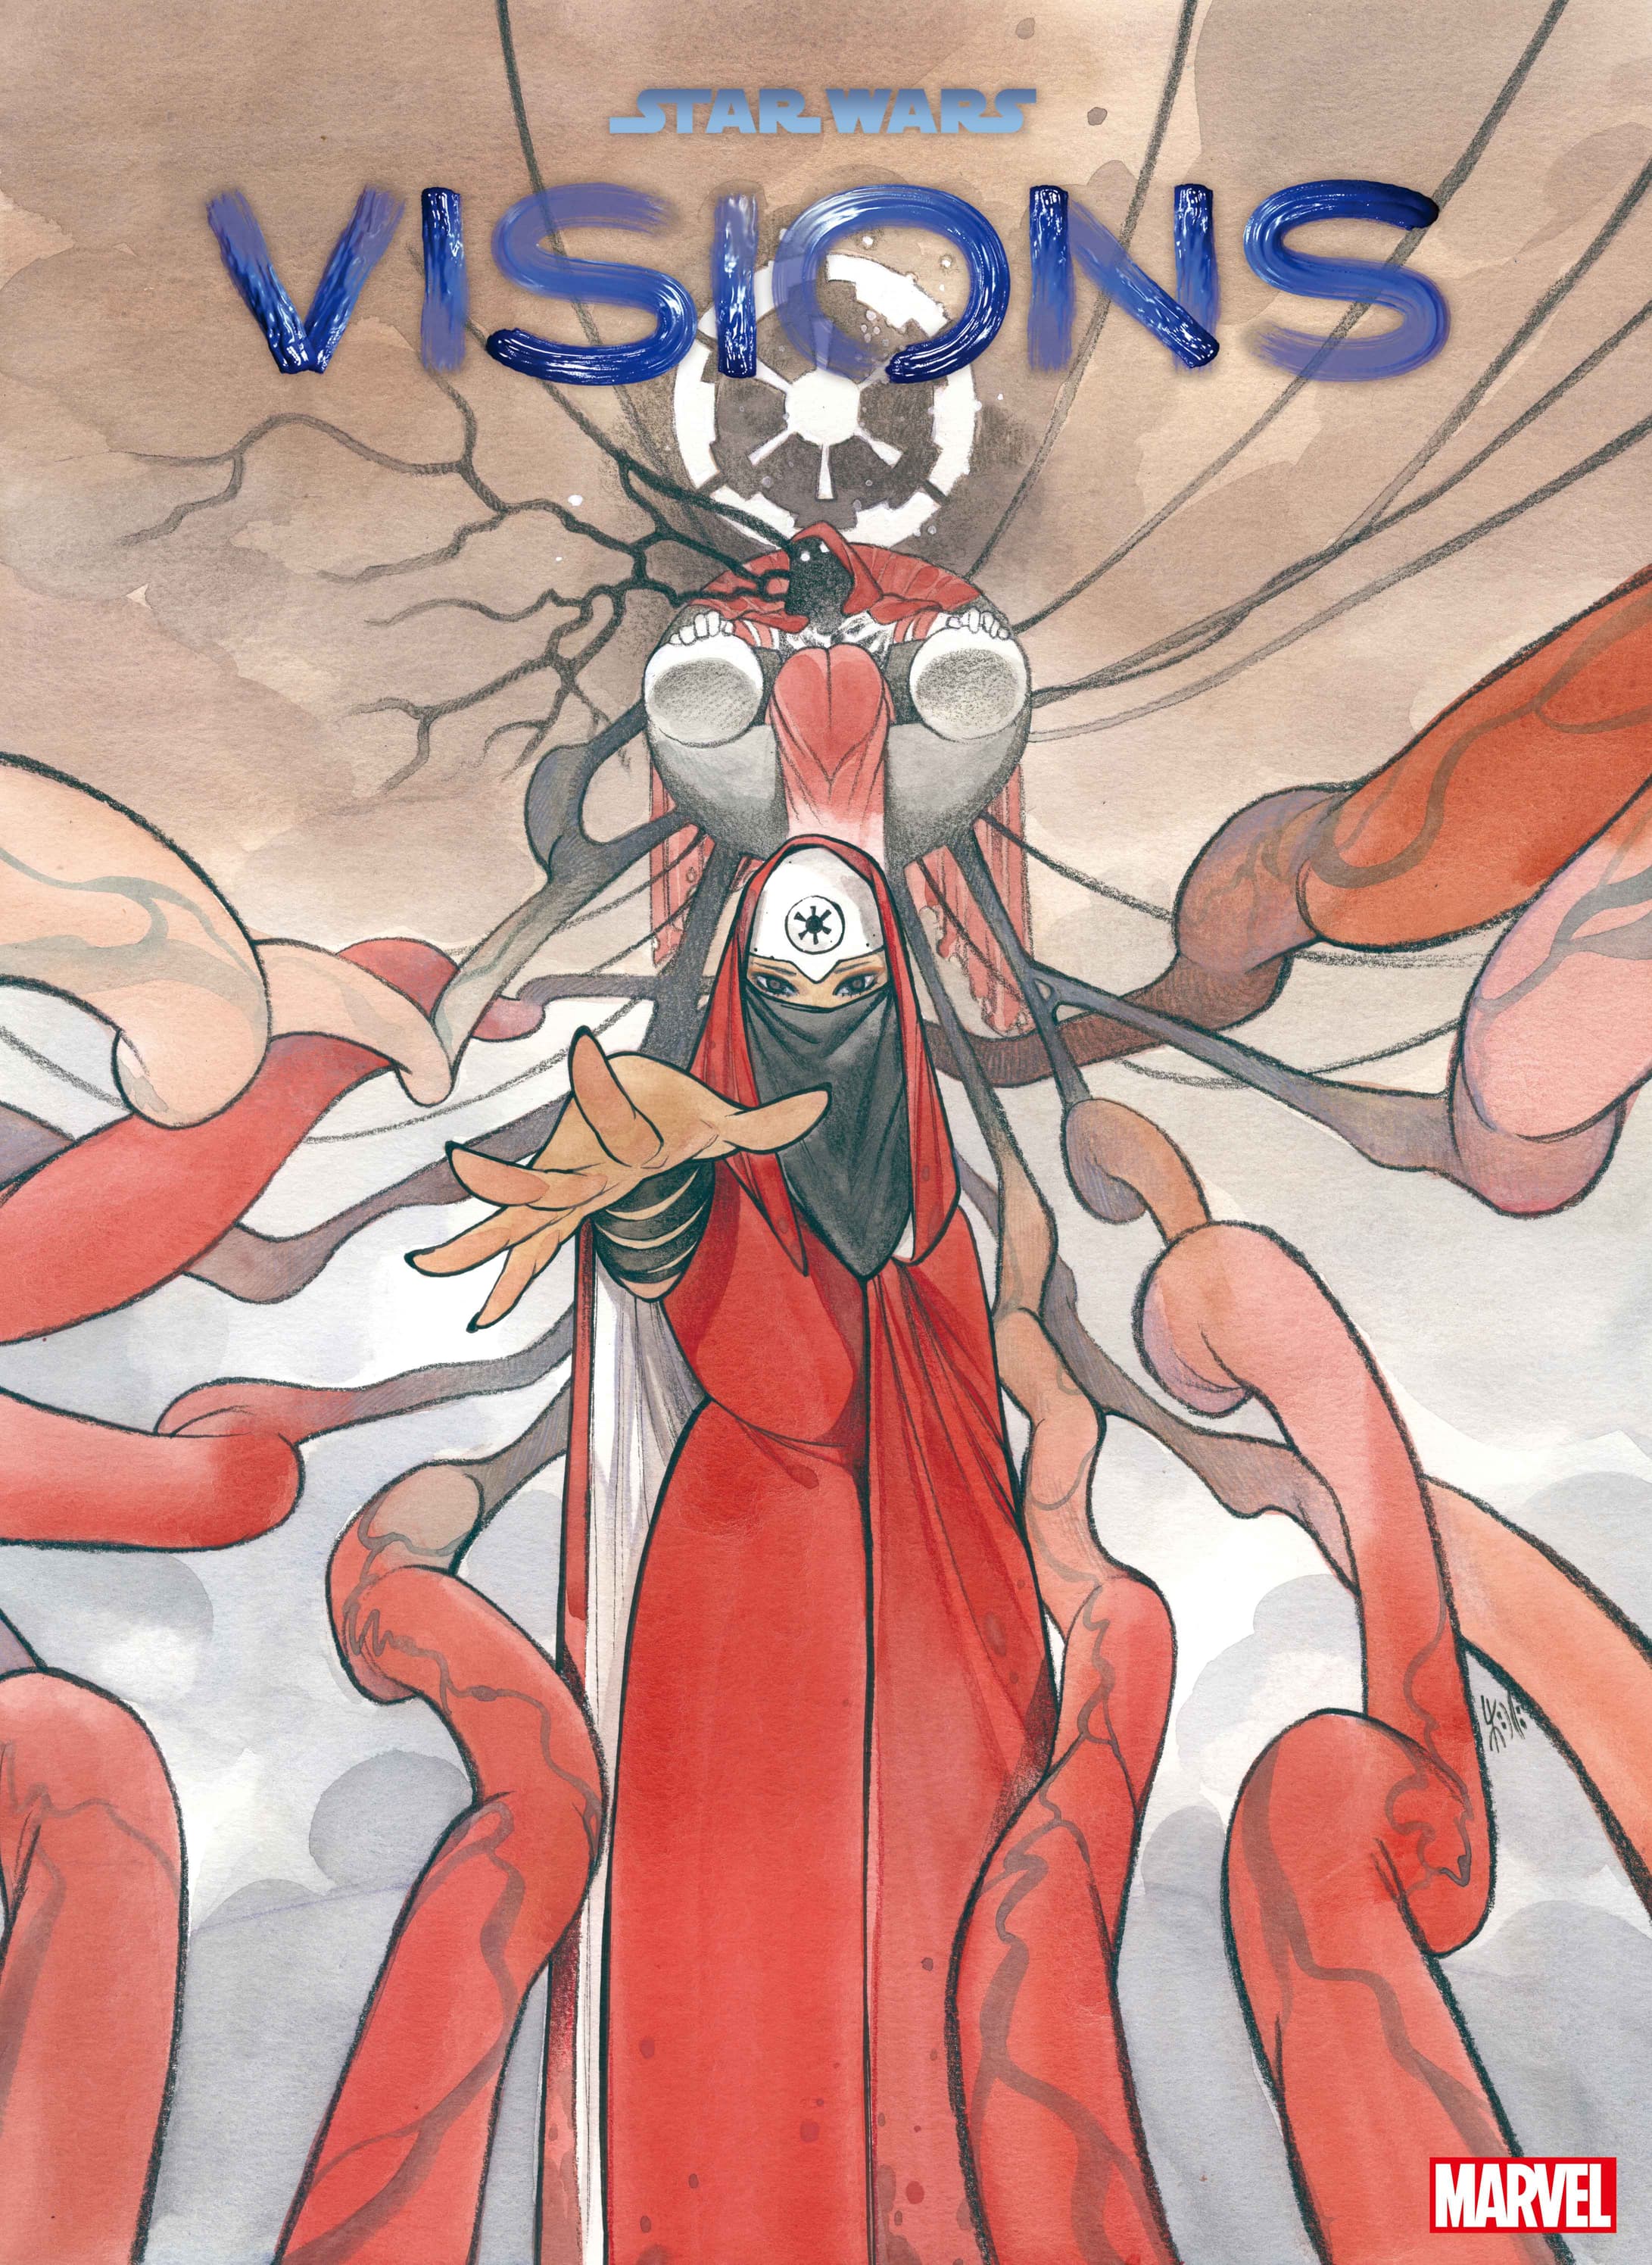 STAR WARS: VISIONS - PEACH MOMOKO #1 cover by Peach Momoko